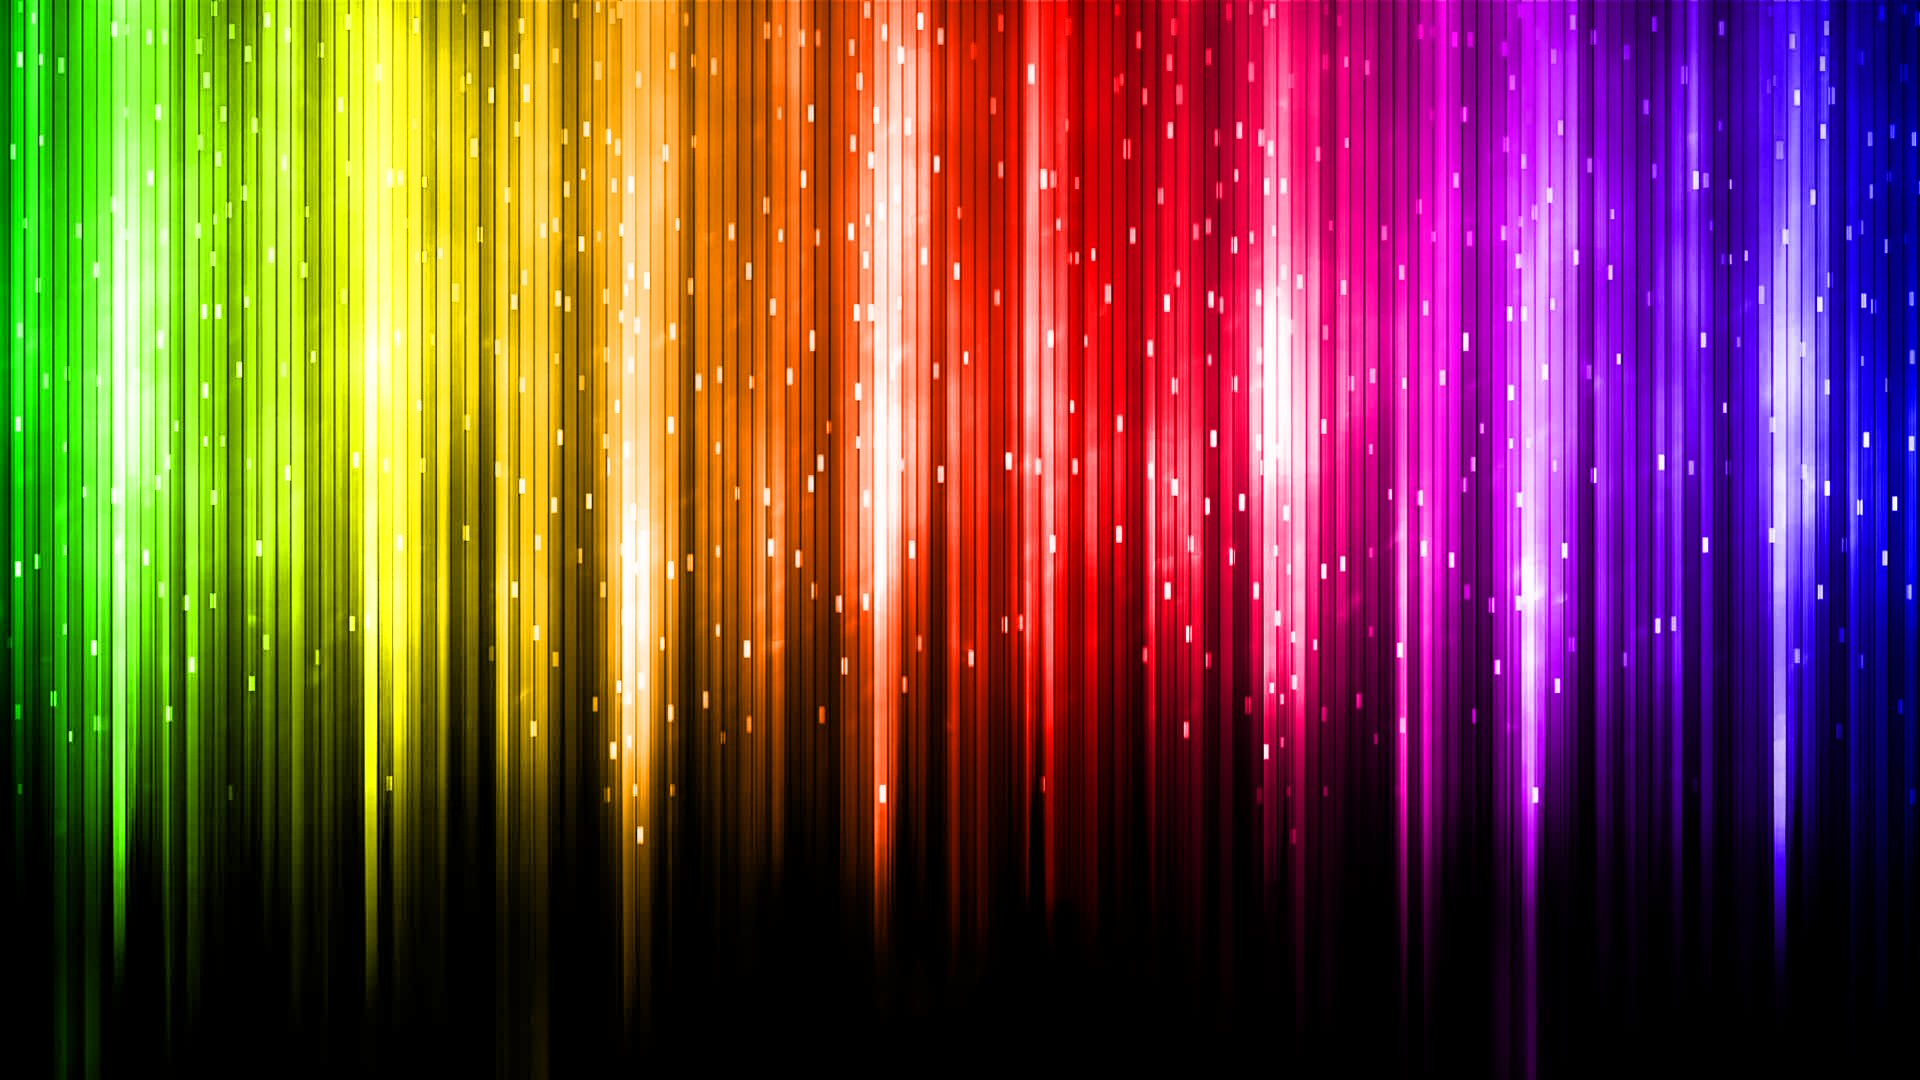 75+] Cool Rainbow Backgrounds - WallpaperSafari